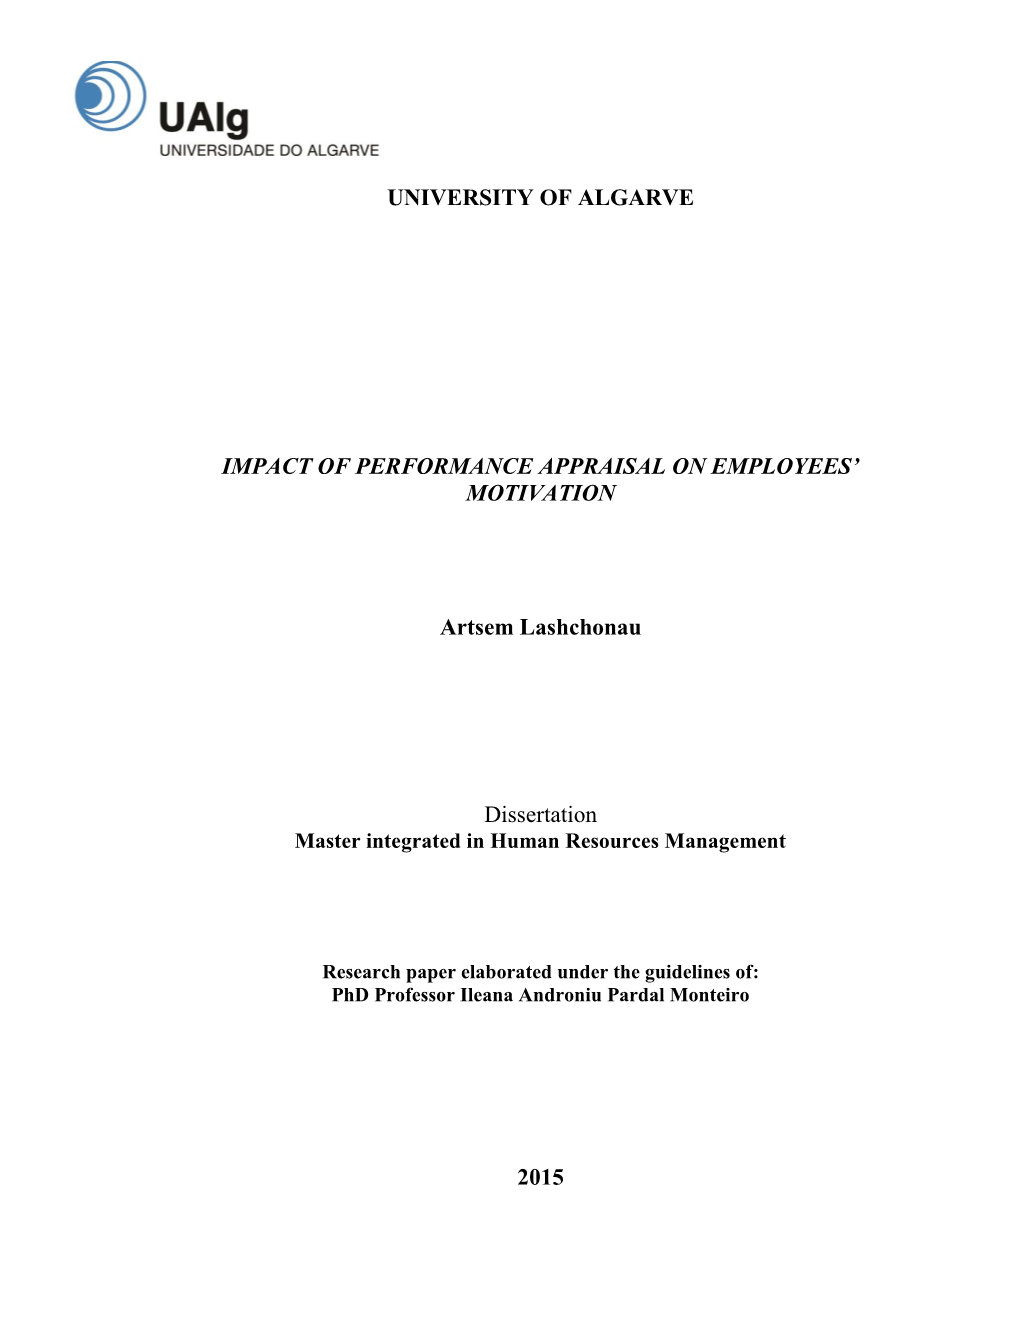 University of Algarve Impact of Performance Appraisal